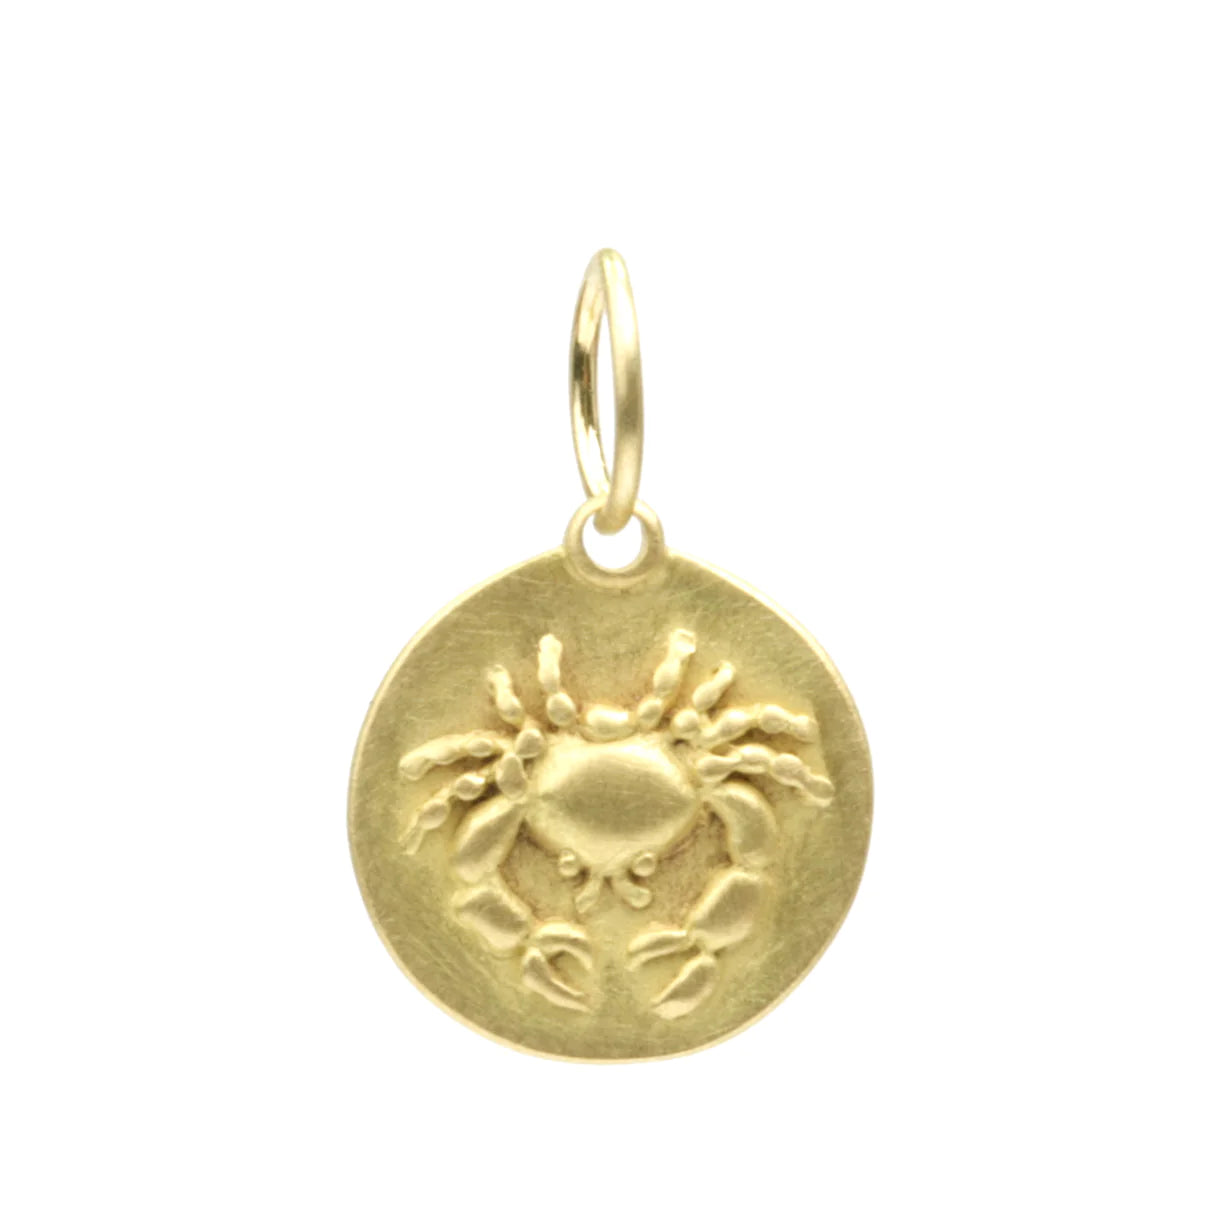 zodiac medal pendant necklace - cancer